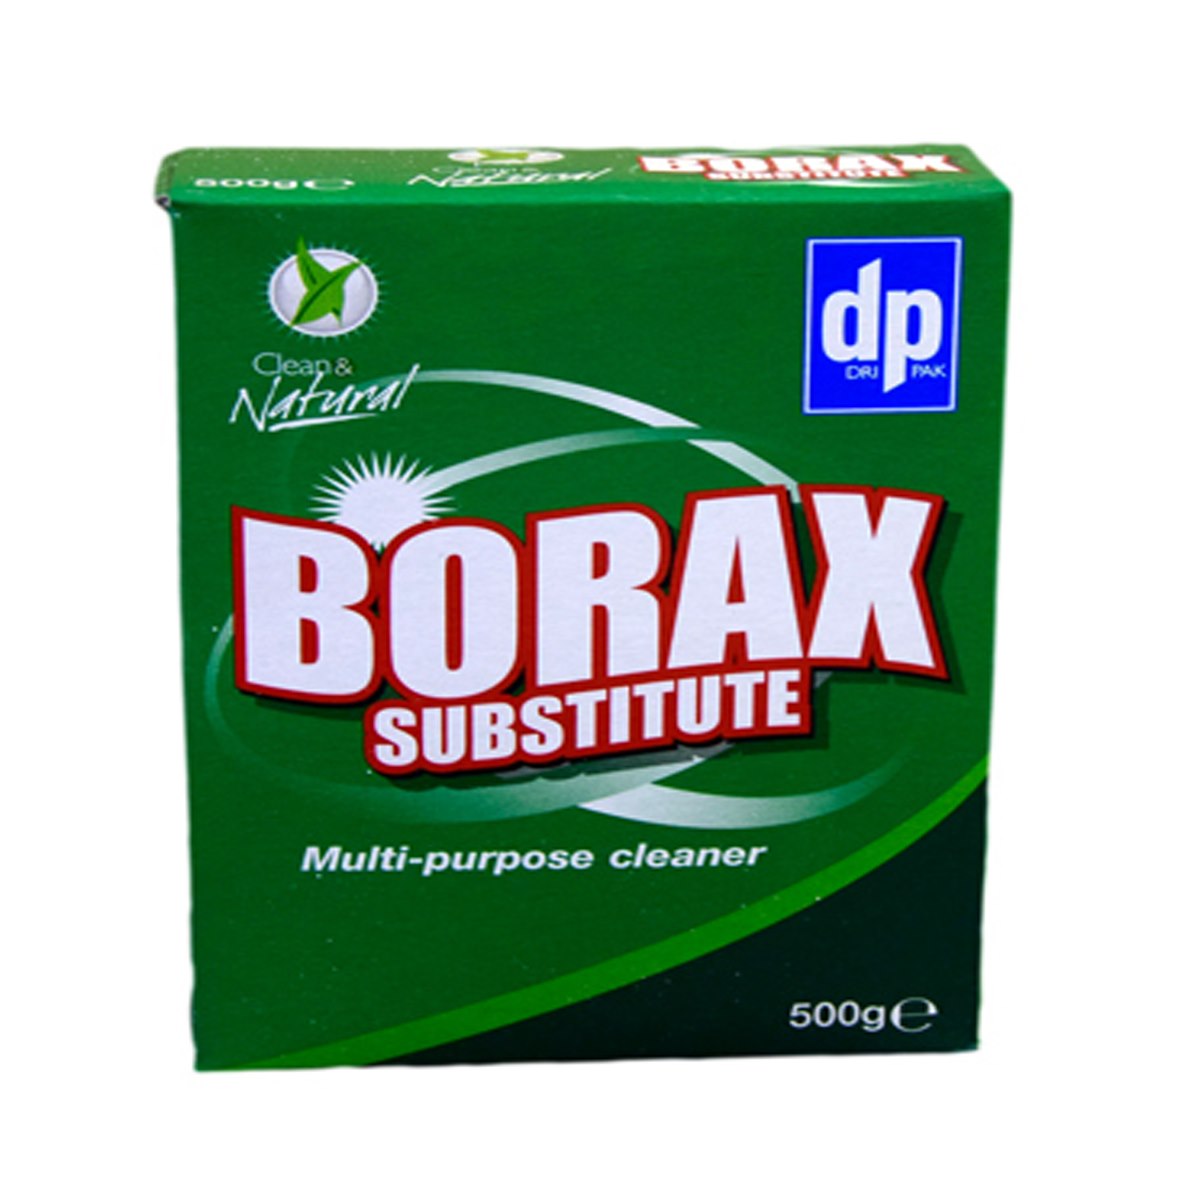 Dri-Pak Clean and Natural Multi-Purpose Borax Substitute 500g